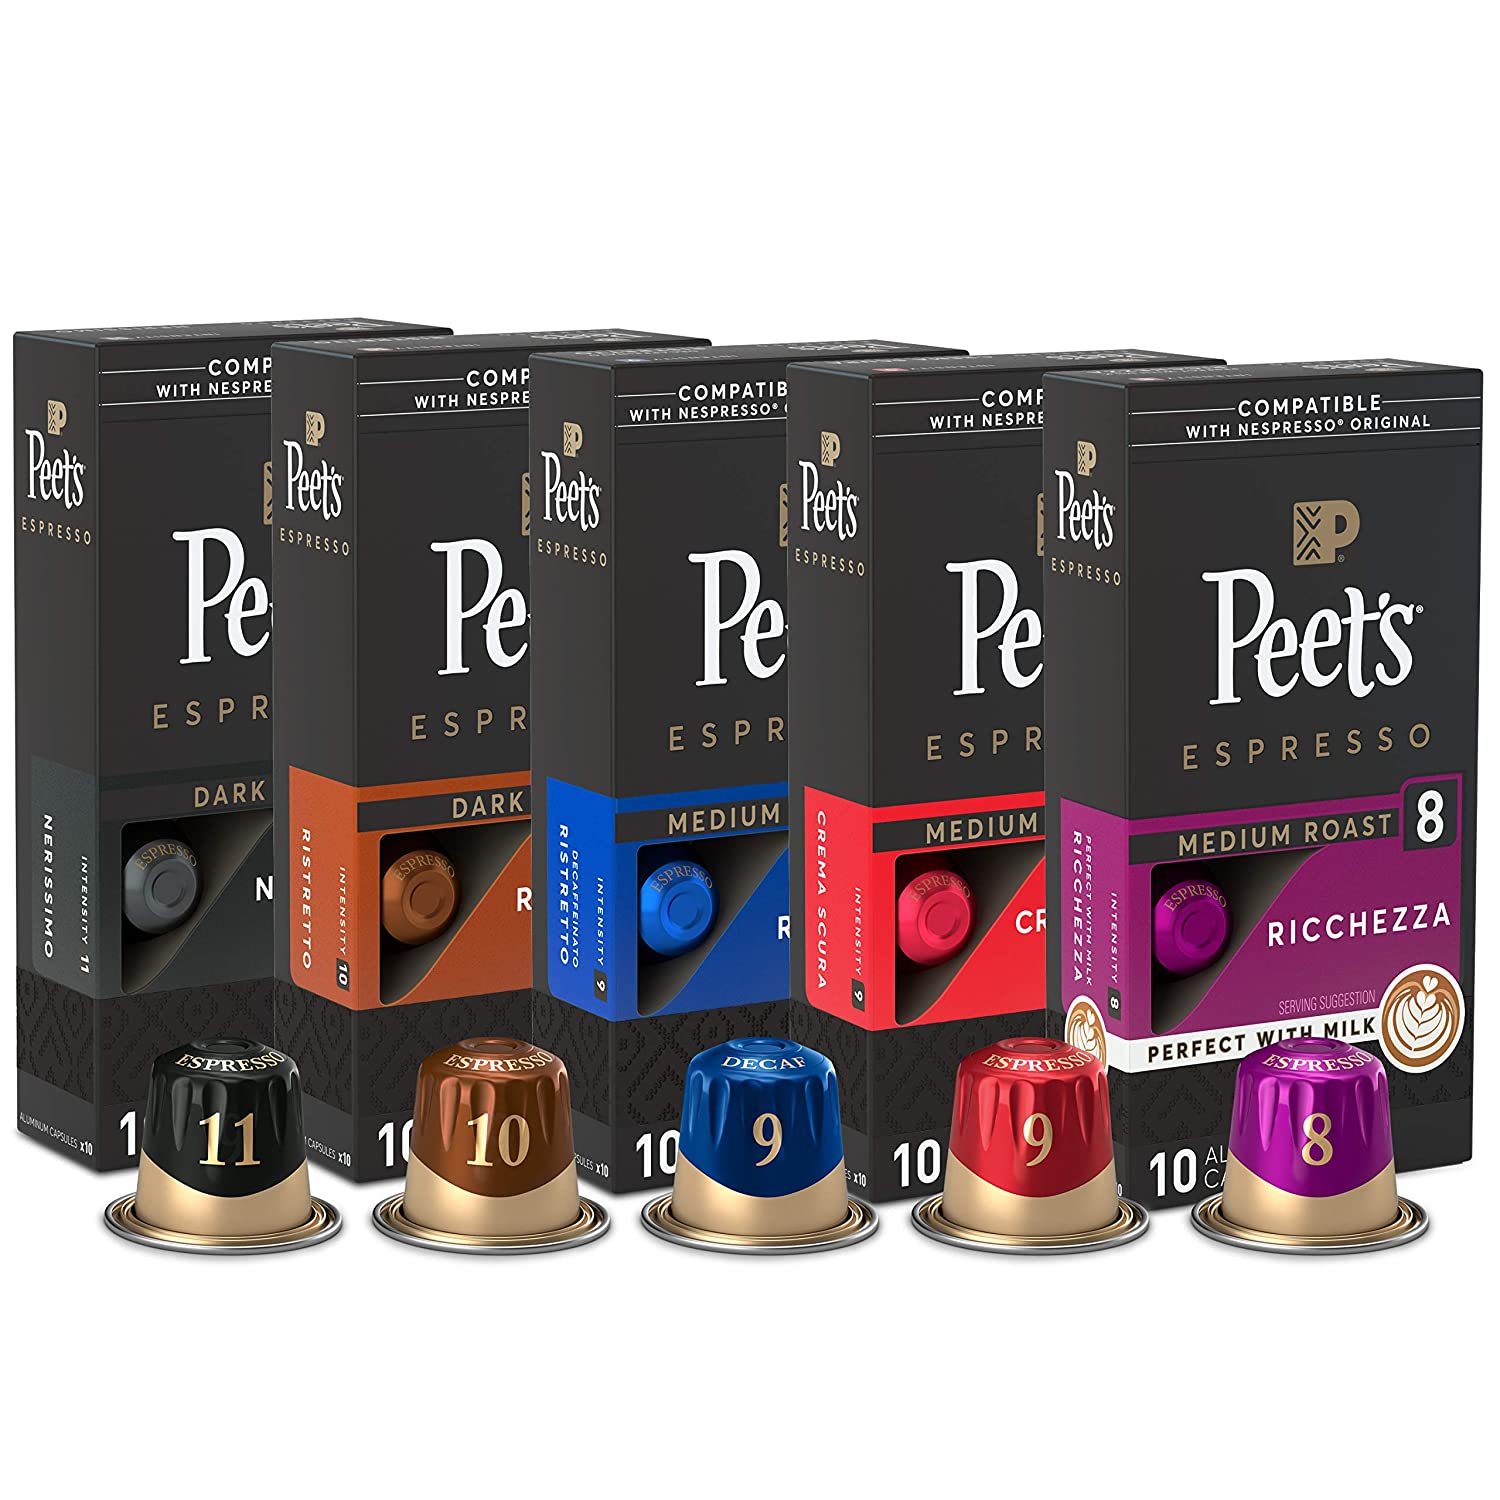 Bestpresso Single Serve Coffee Capsules Variety Pack Coffee Pods